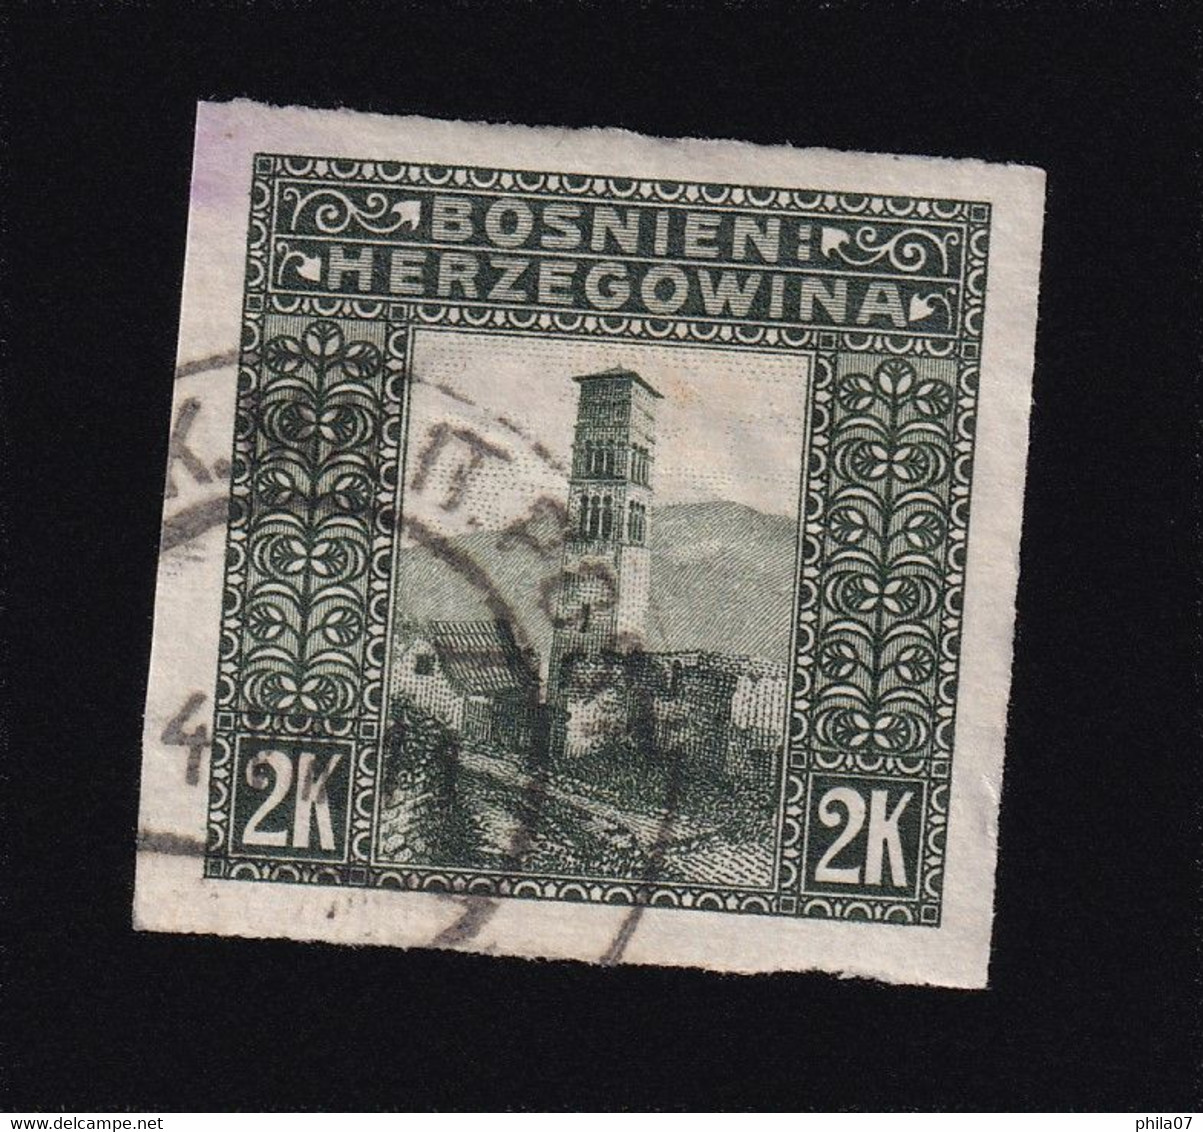 BOSNIA AND HERZEGOVINA - Landscape Stamp 2 Krune, Imperforate Stamp, Cancelled - Bosnie-Herzegovine